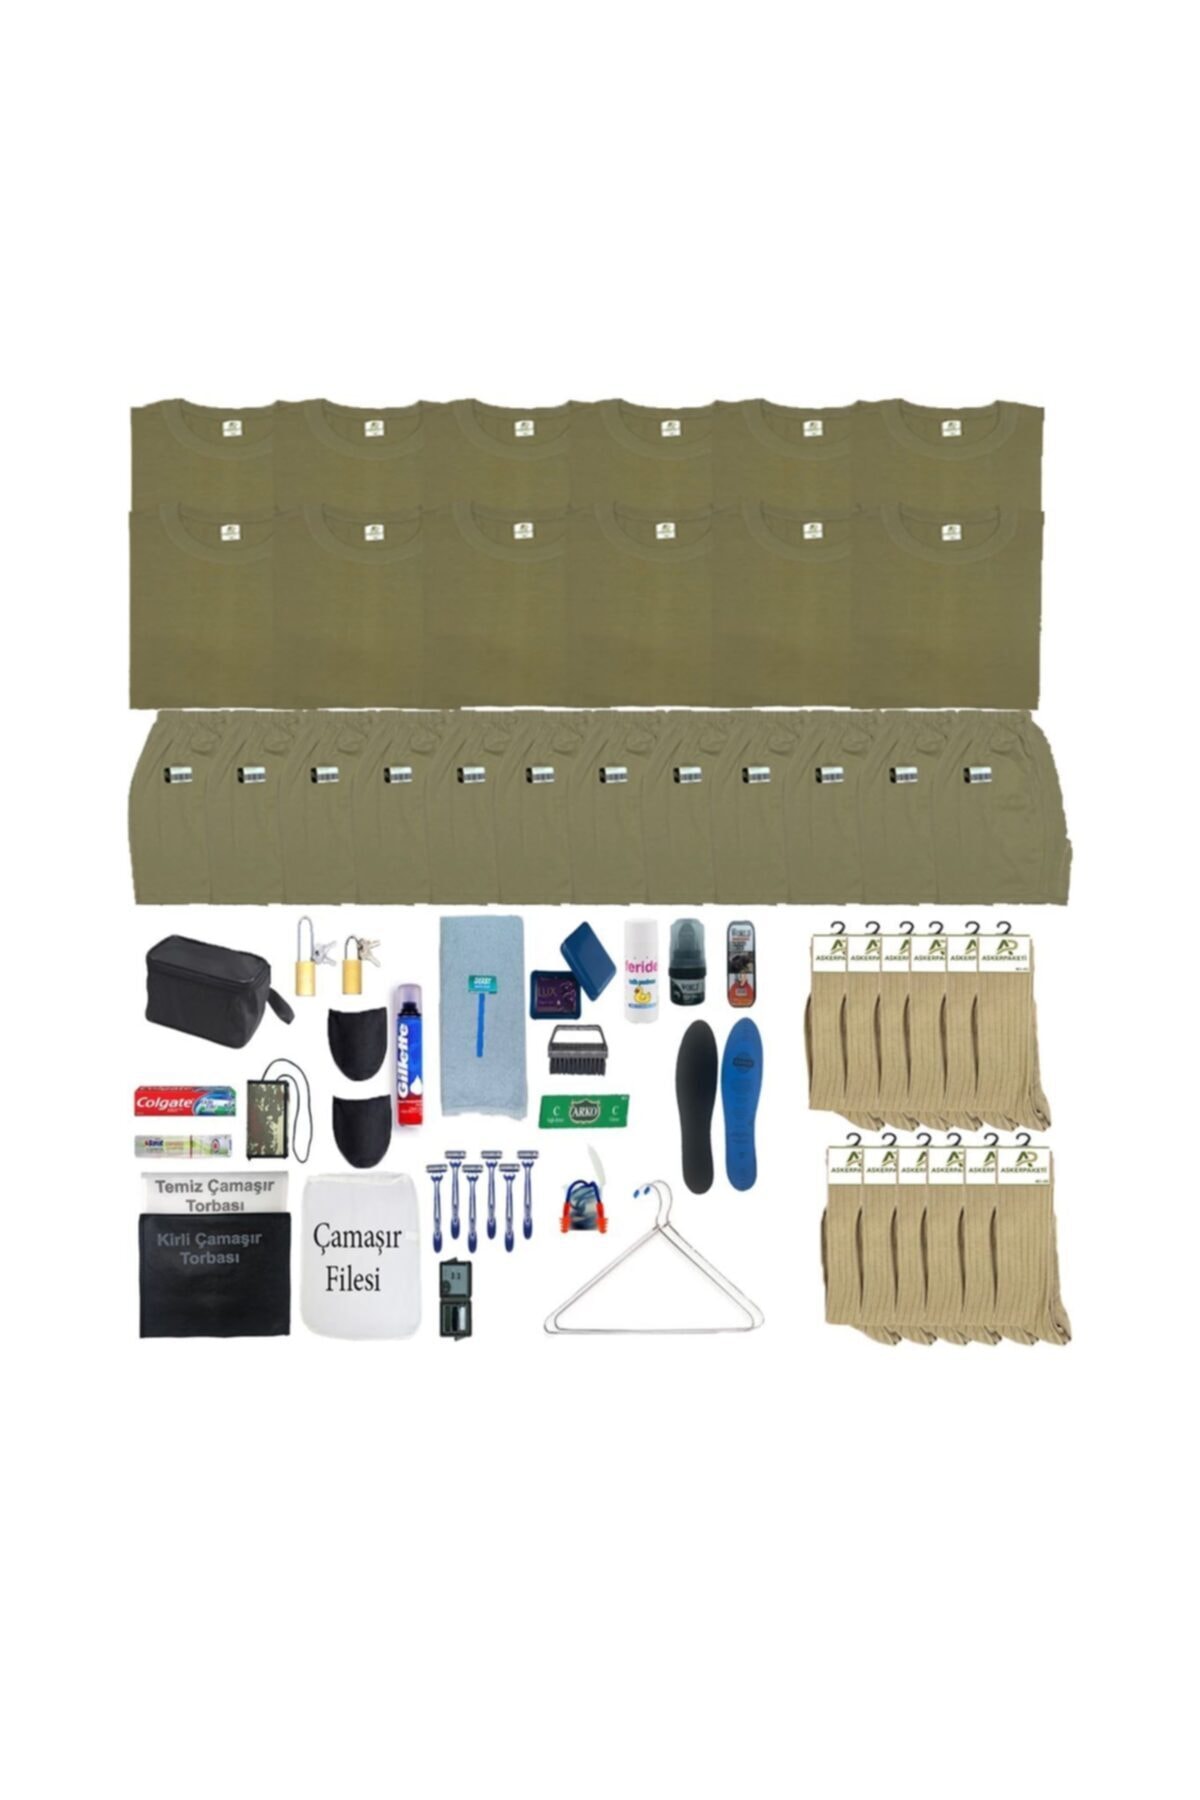 Askerimalzemelerim 12’li Tavsiye Asker Seti : Bedelli/acemi Askeri Malzeme Paketi